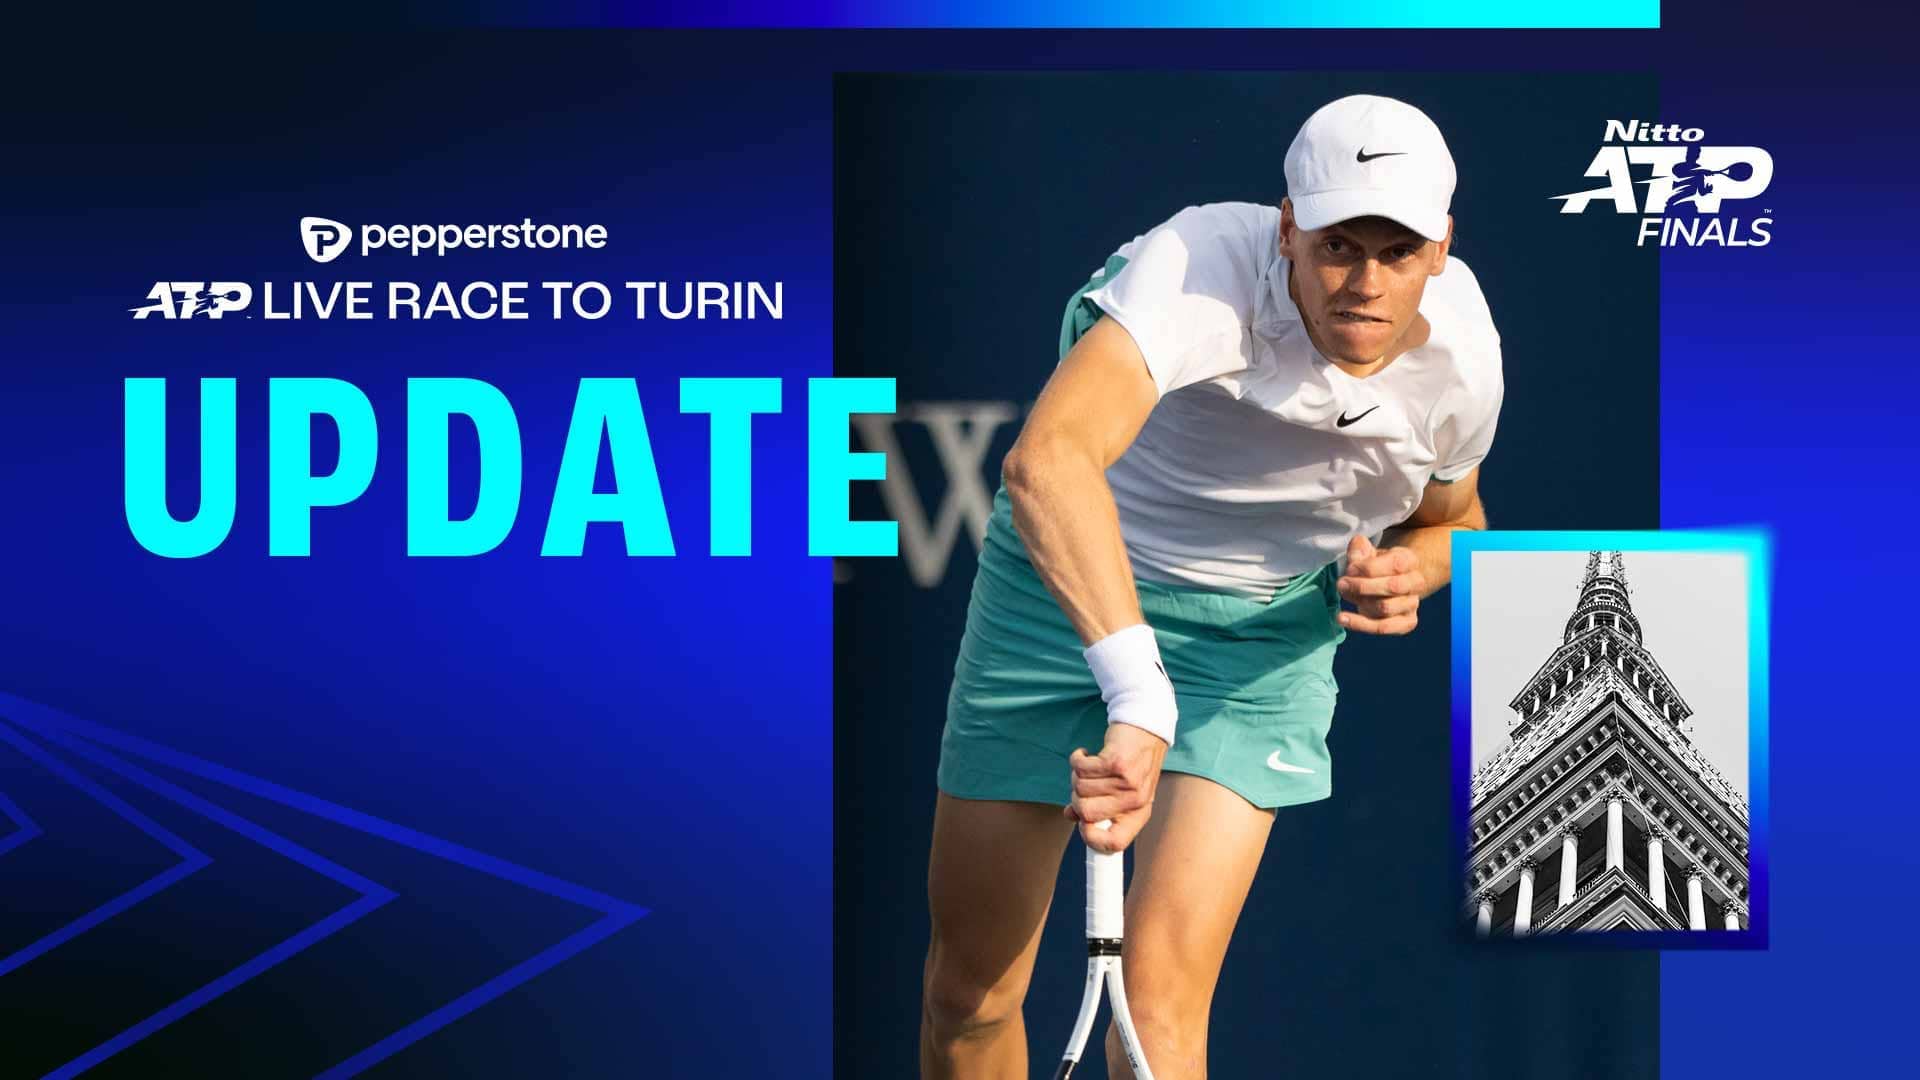 ATP WTA Live – Apps on Google Play